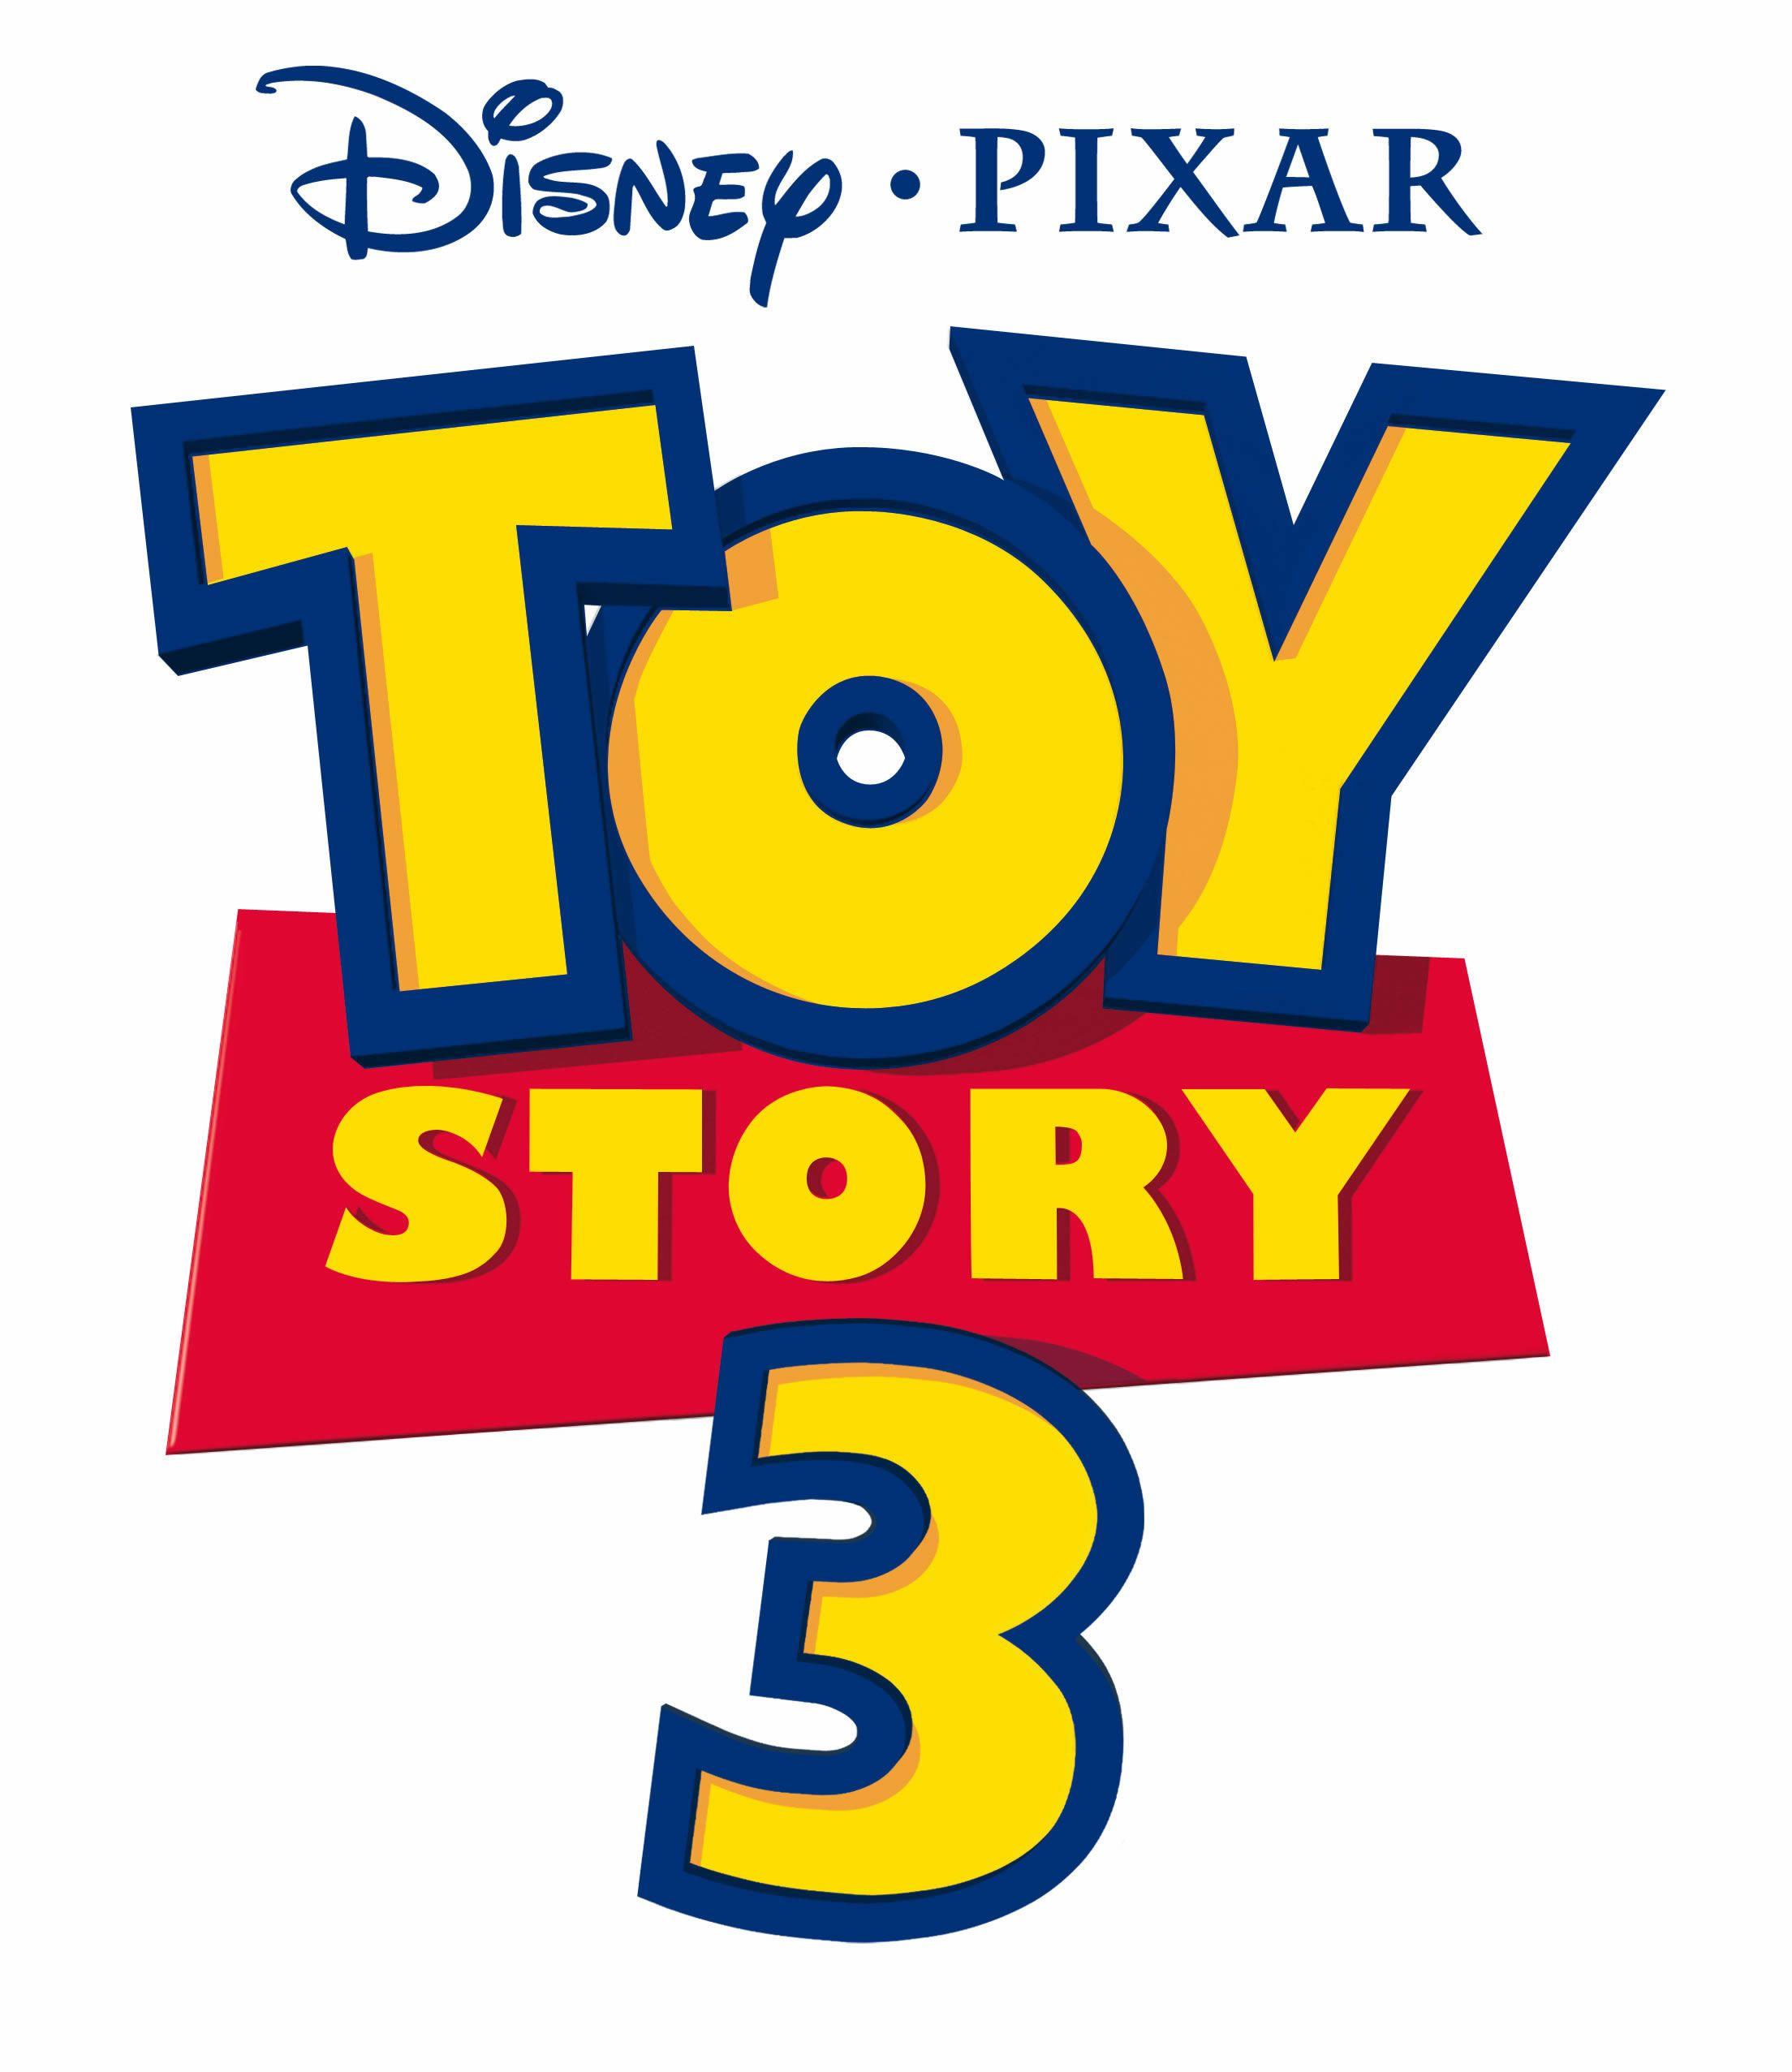 Disney Pixar Up Logo - Disney Pixar Comic Con Animation Panel Reports On TOY STORY